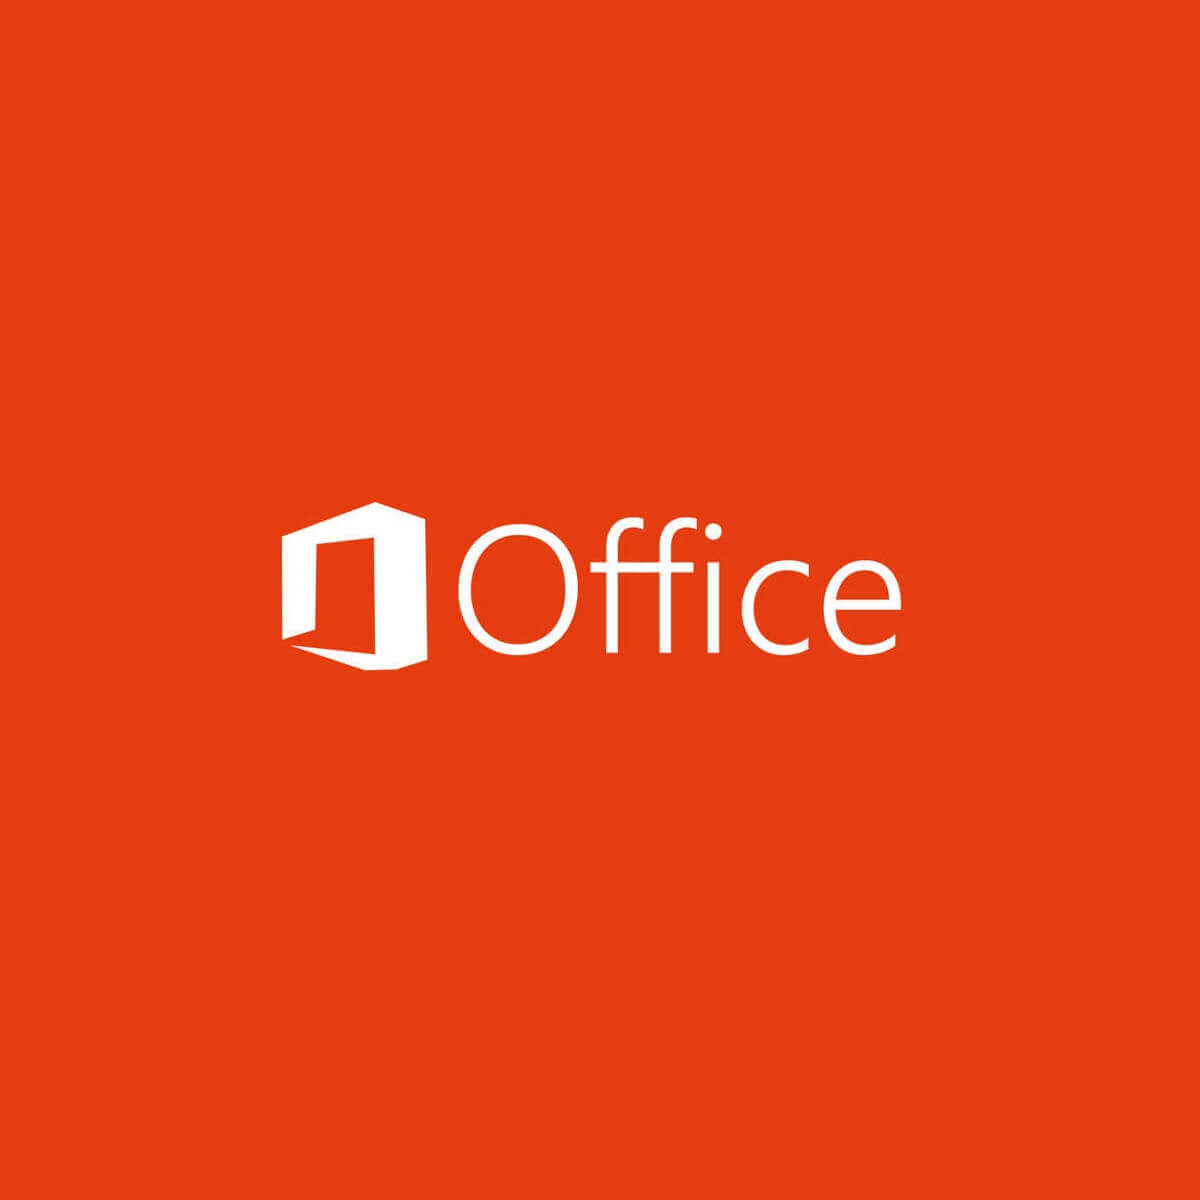 Microsoft Office encountered an error during setup